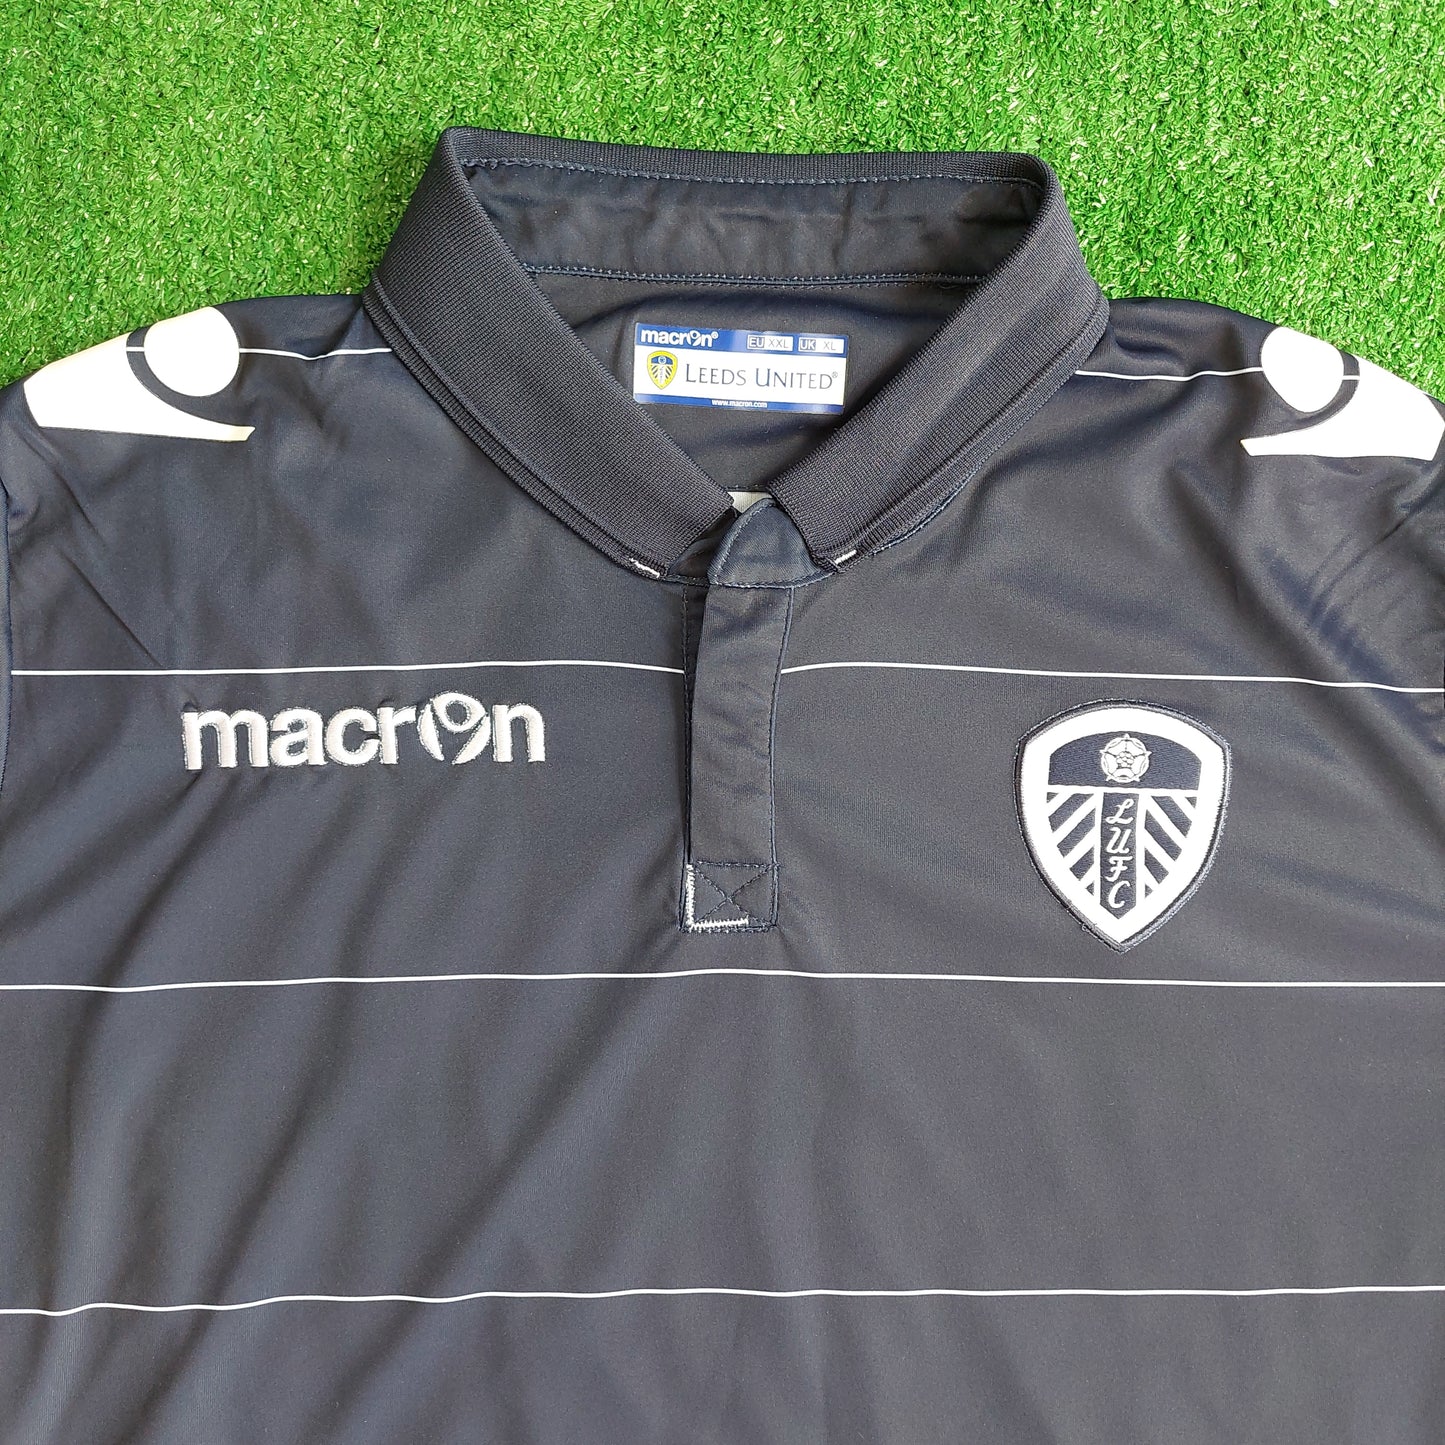 Leeds United 2014/15 *Sponsorless* Away Shirt (Excellent) - Size XL